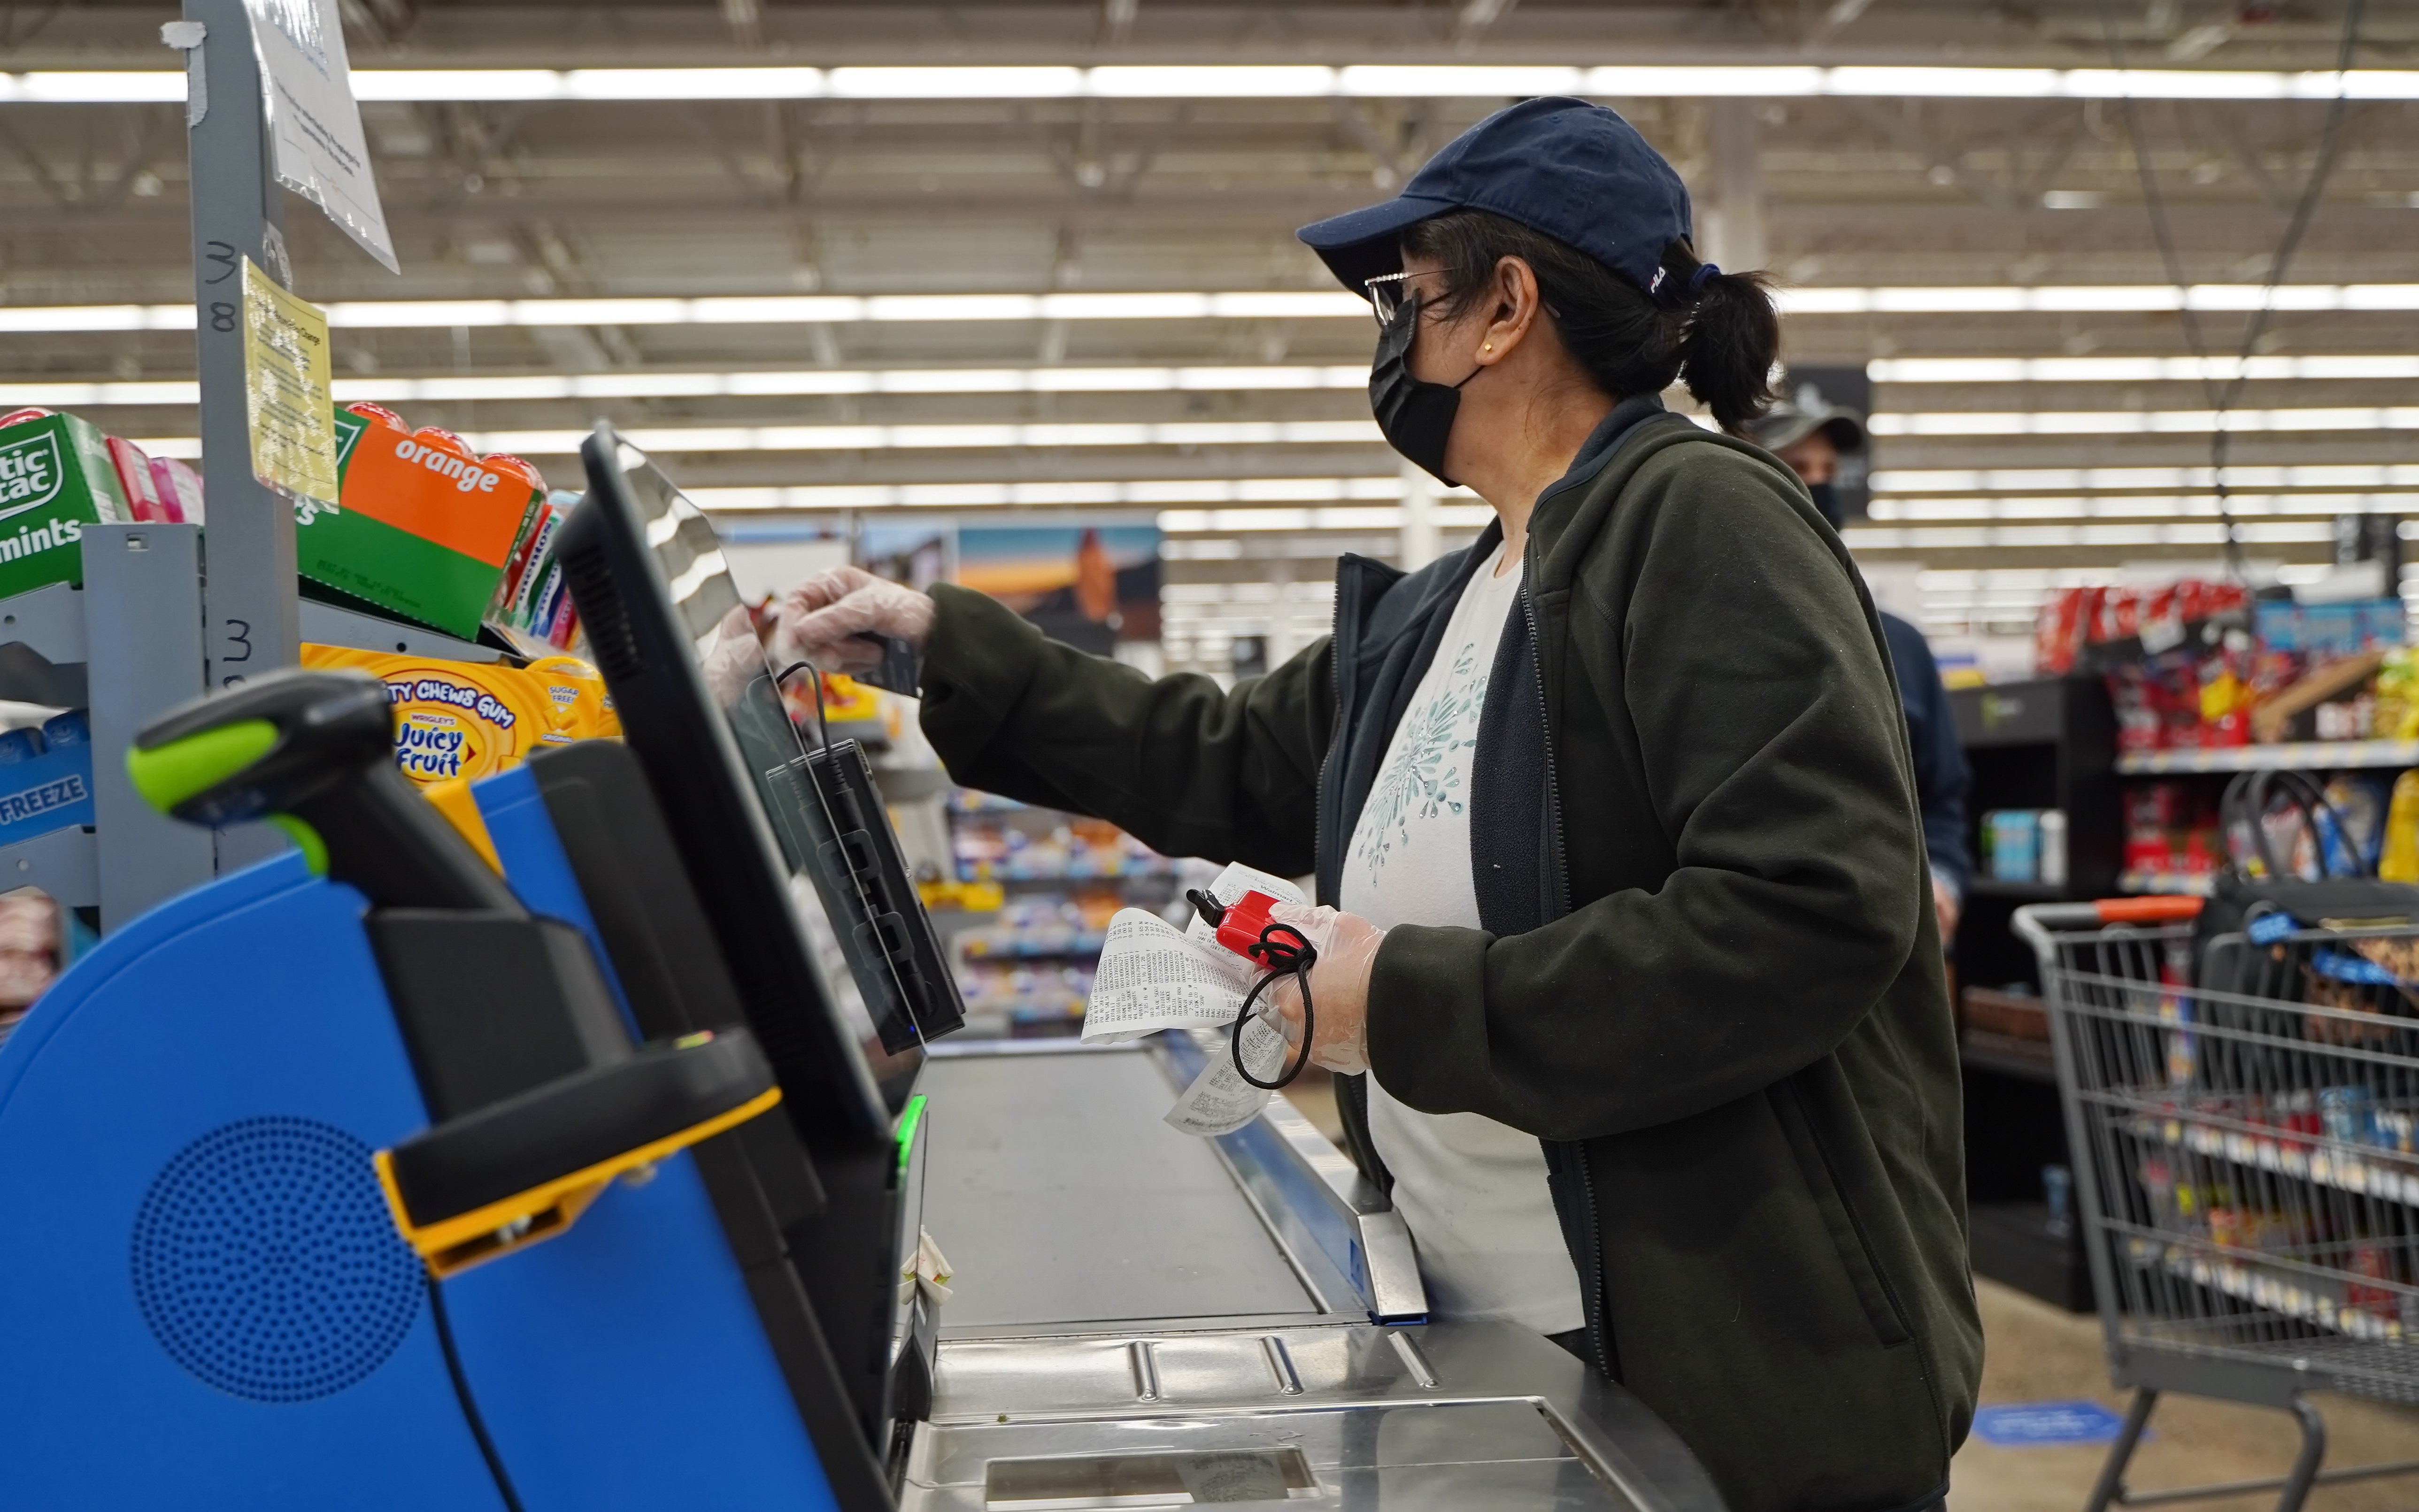 A cashier working in a supermarket | Source: Shutterstock